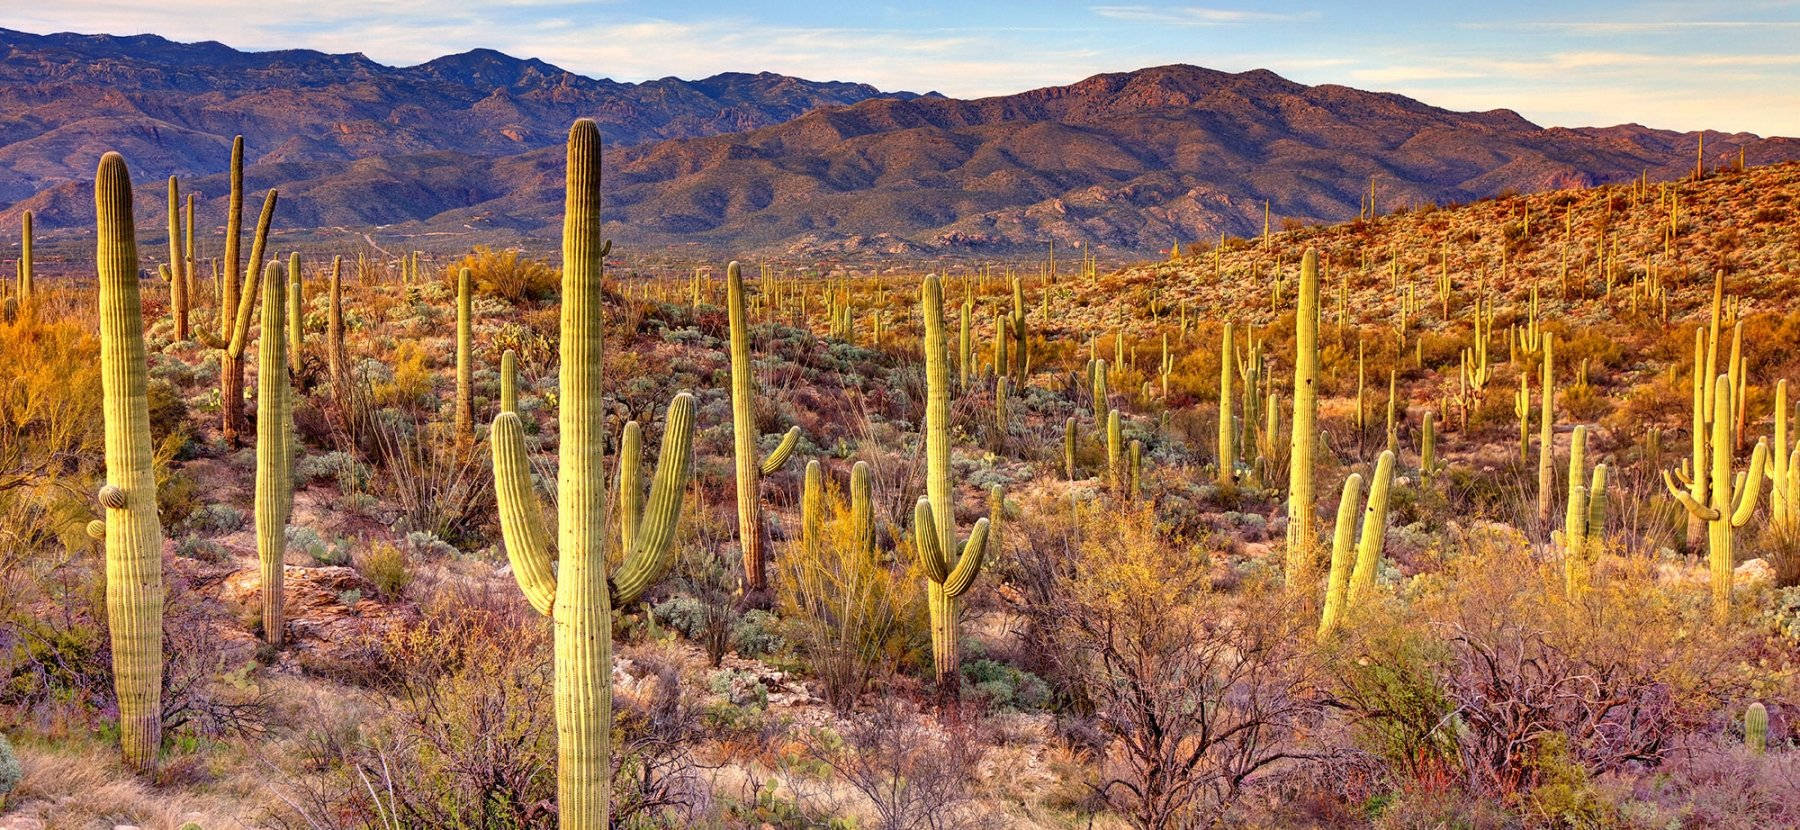 Arizona Desert Cactus Garden Background